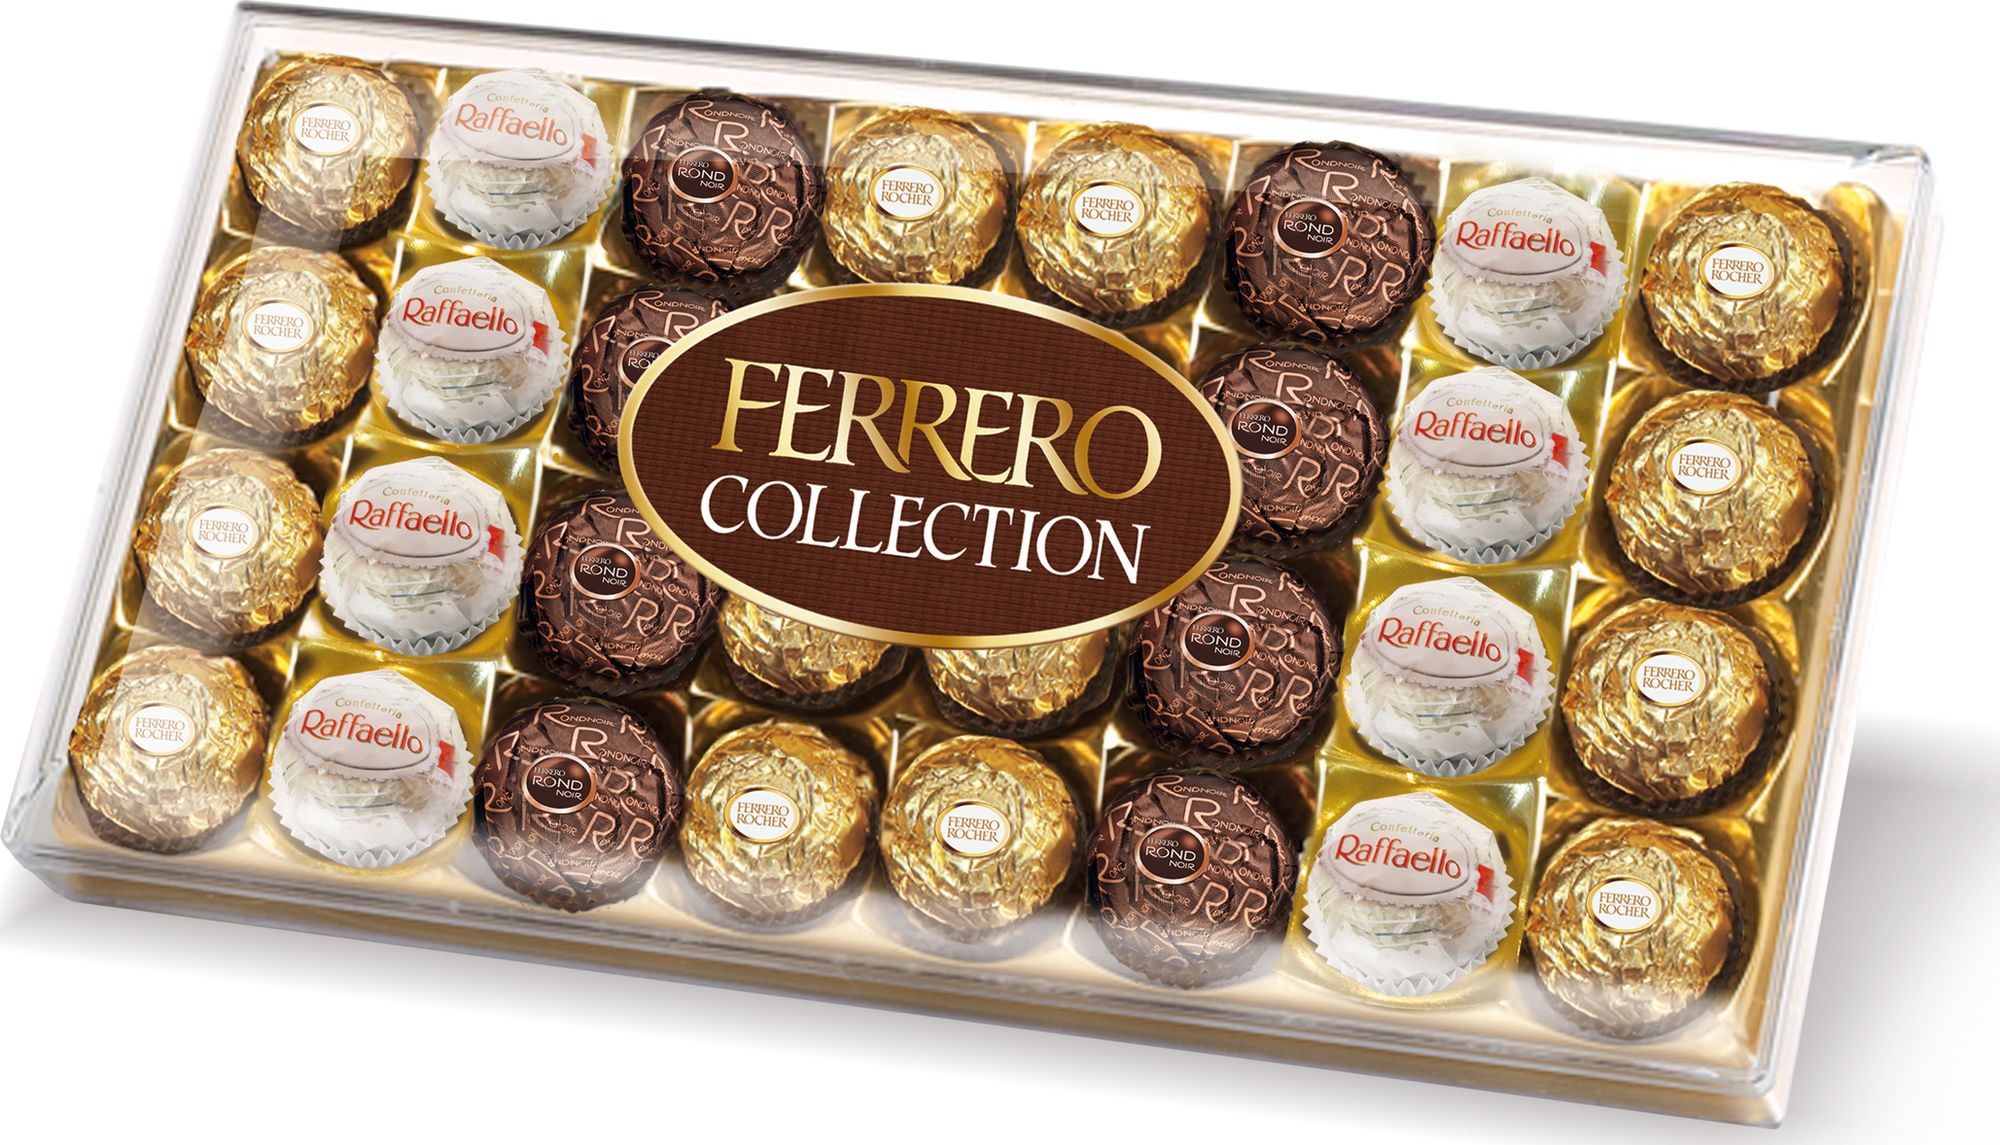 Th collection. Набор конфет Ferrero collection, 359 г. Конфеты Ferrero collection т32. Ферреро коллекция 359.2г. Ферреро Роше конфеты большая коробка.